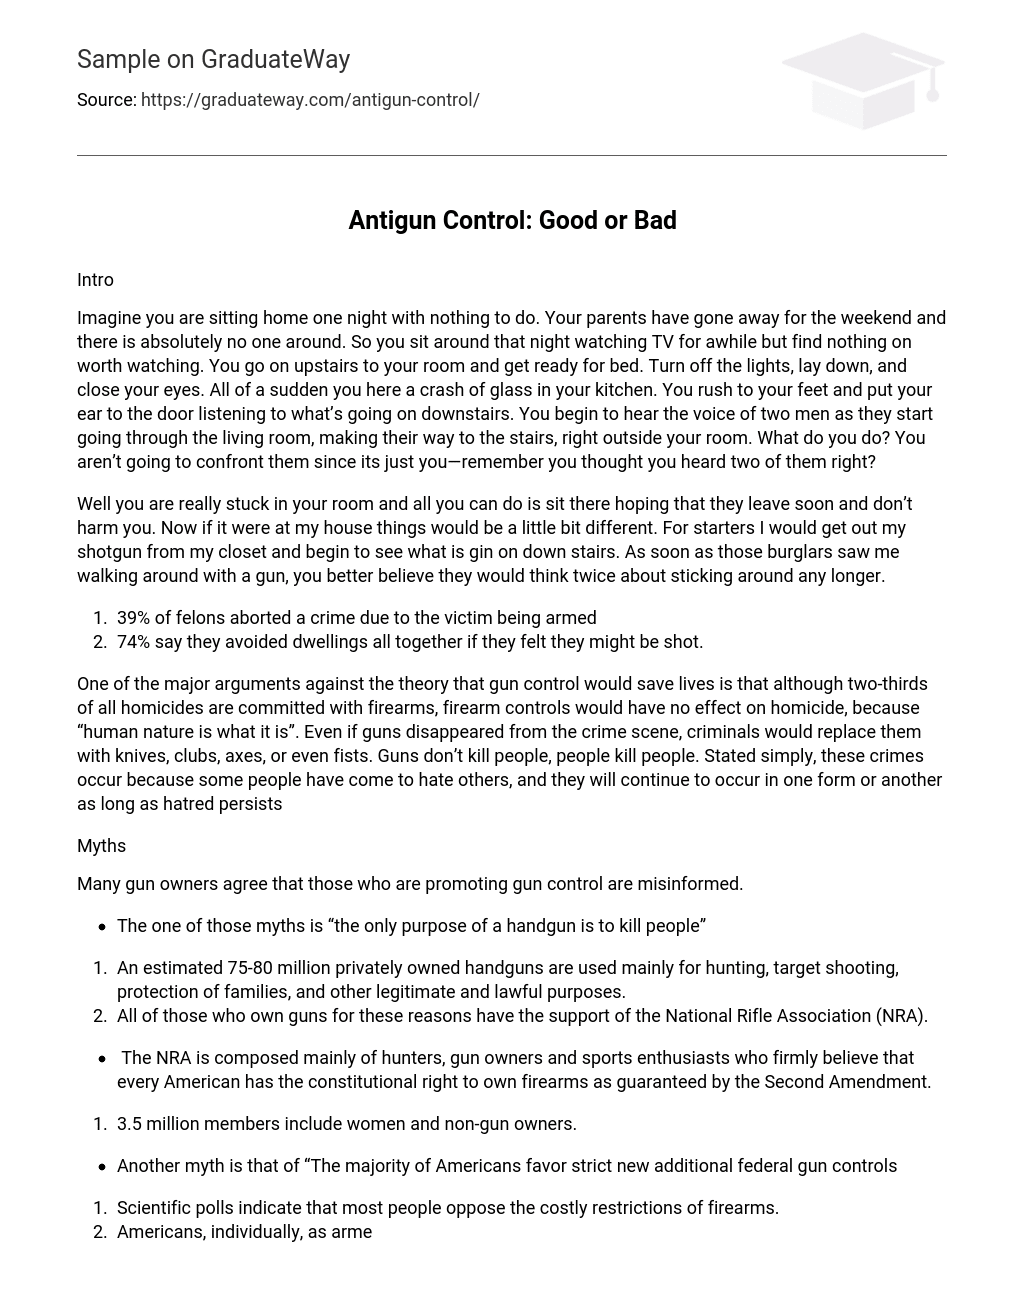 Antigun Control: Good or Bad